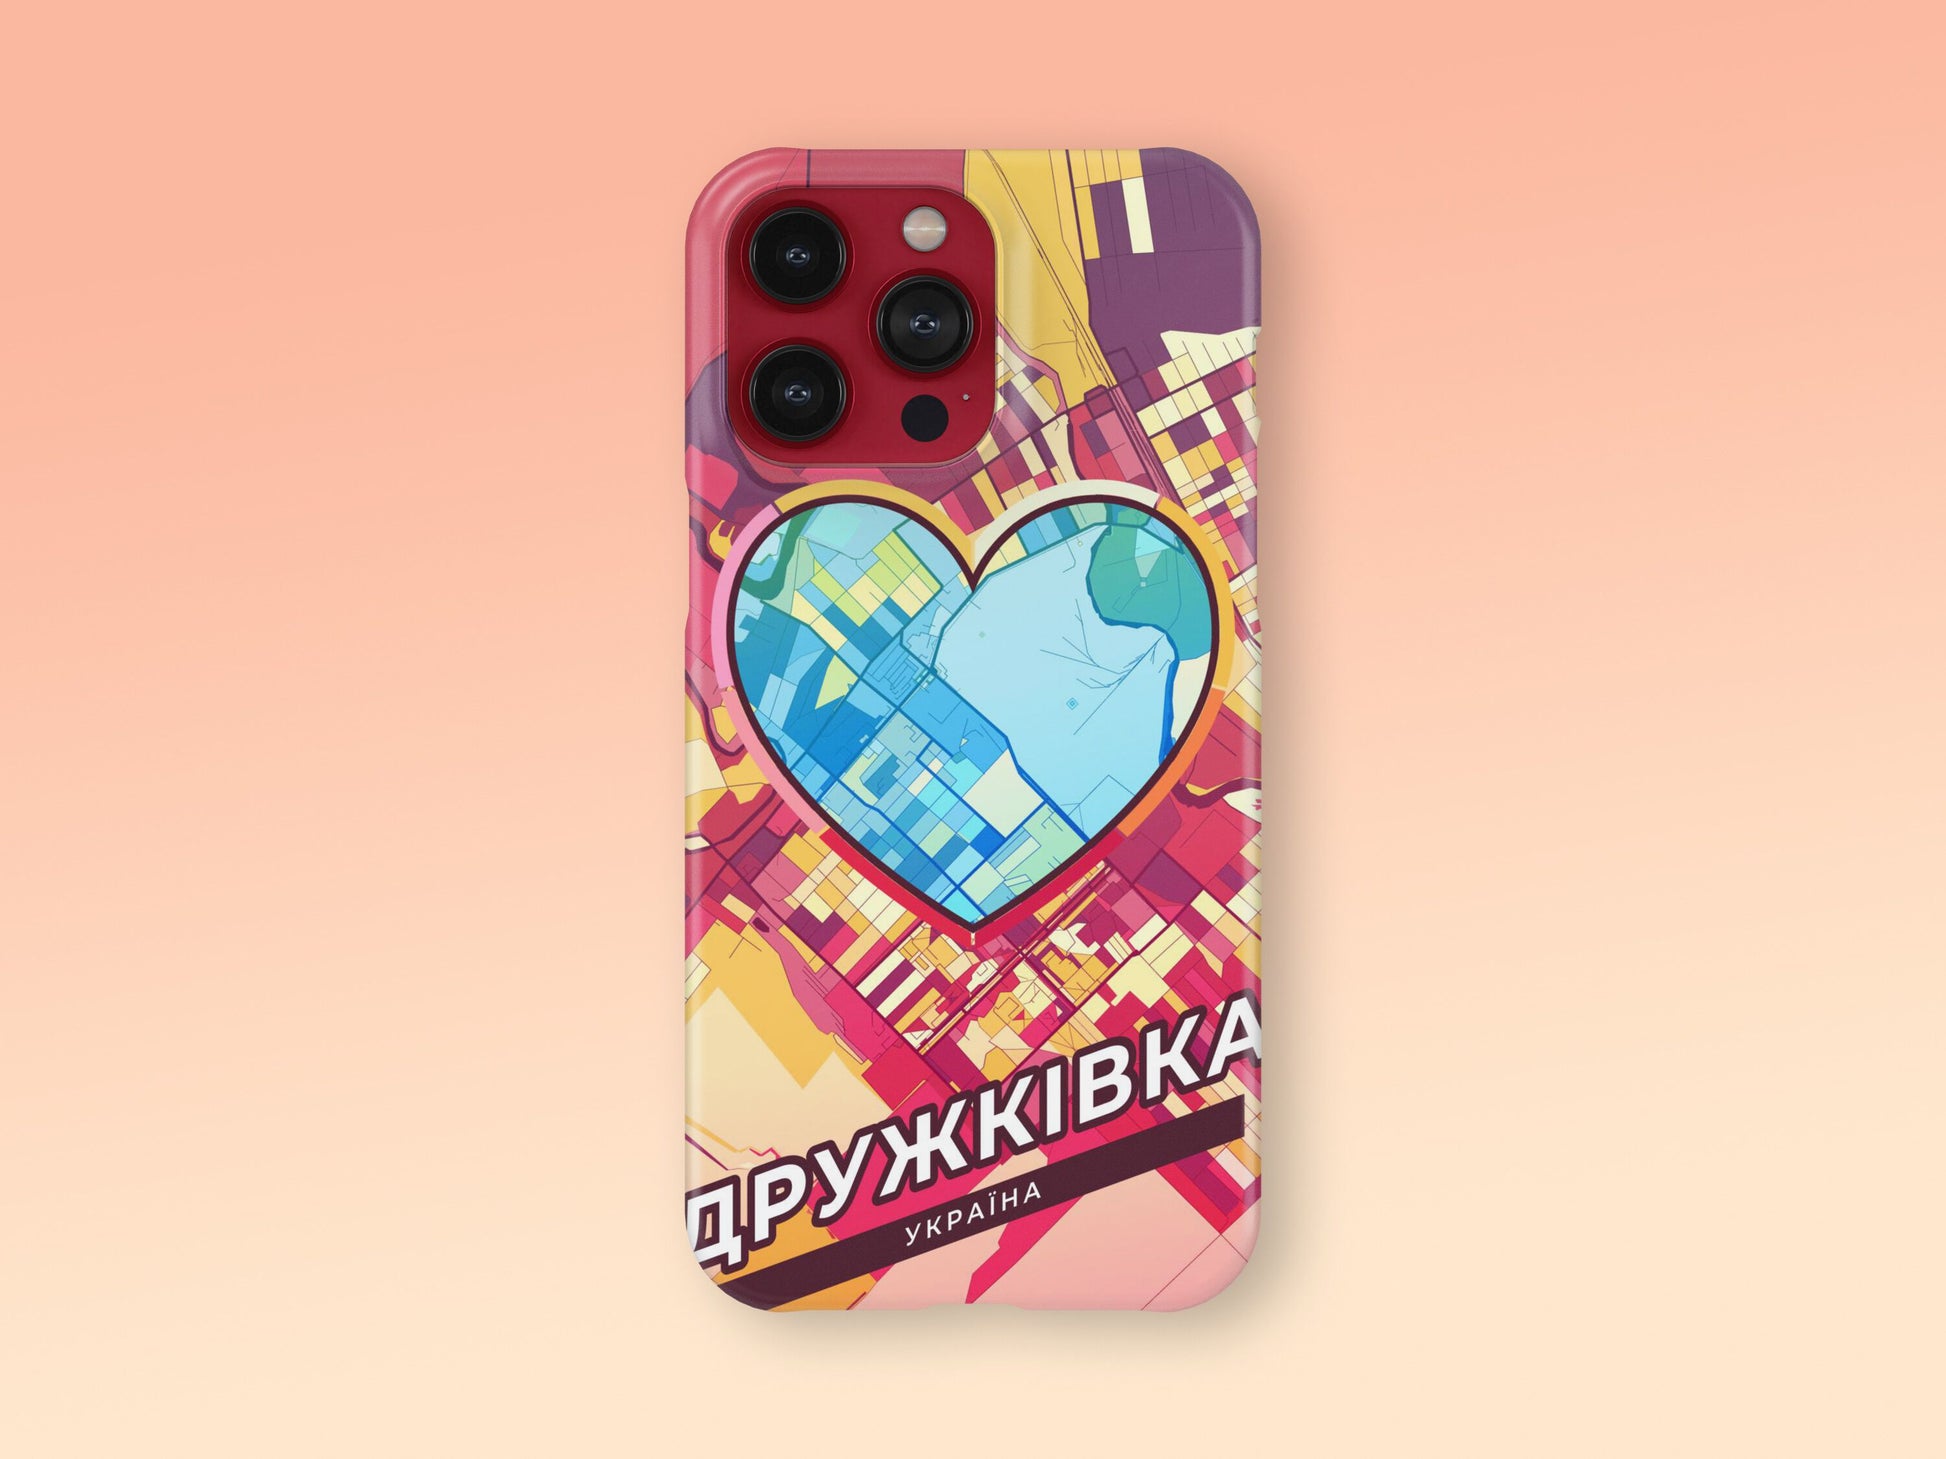 Druzhkivka Ukraine slim phone case with colorful icon. Birthday, wedding or housewarming gift. Couple match cases. 2